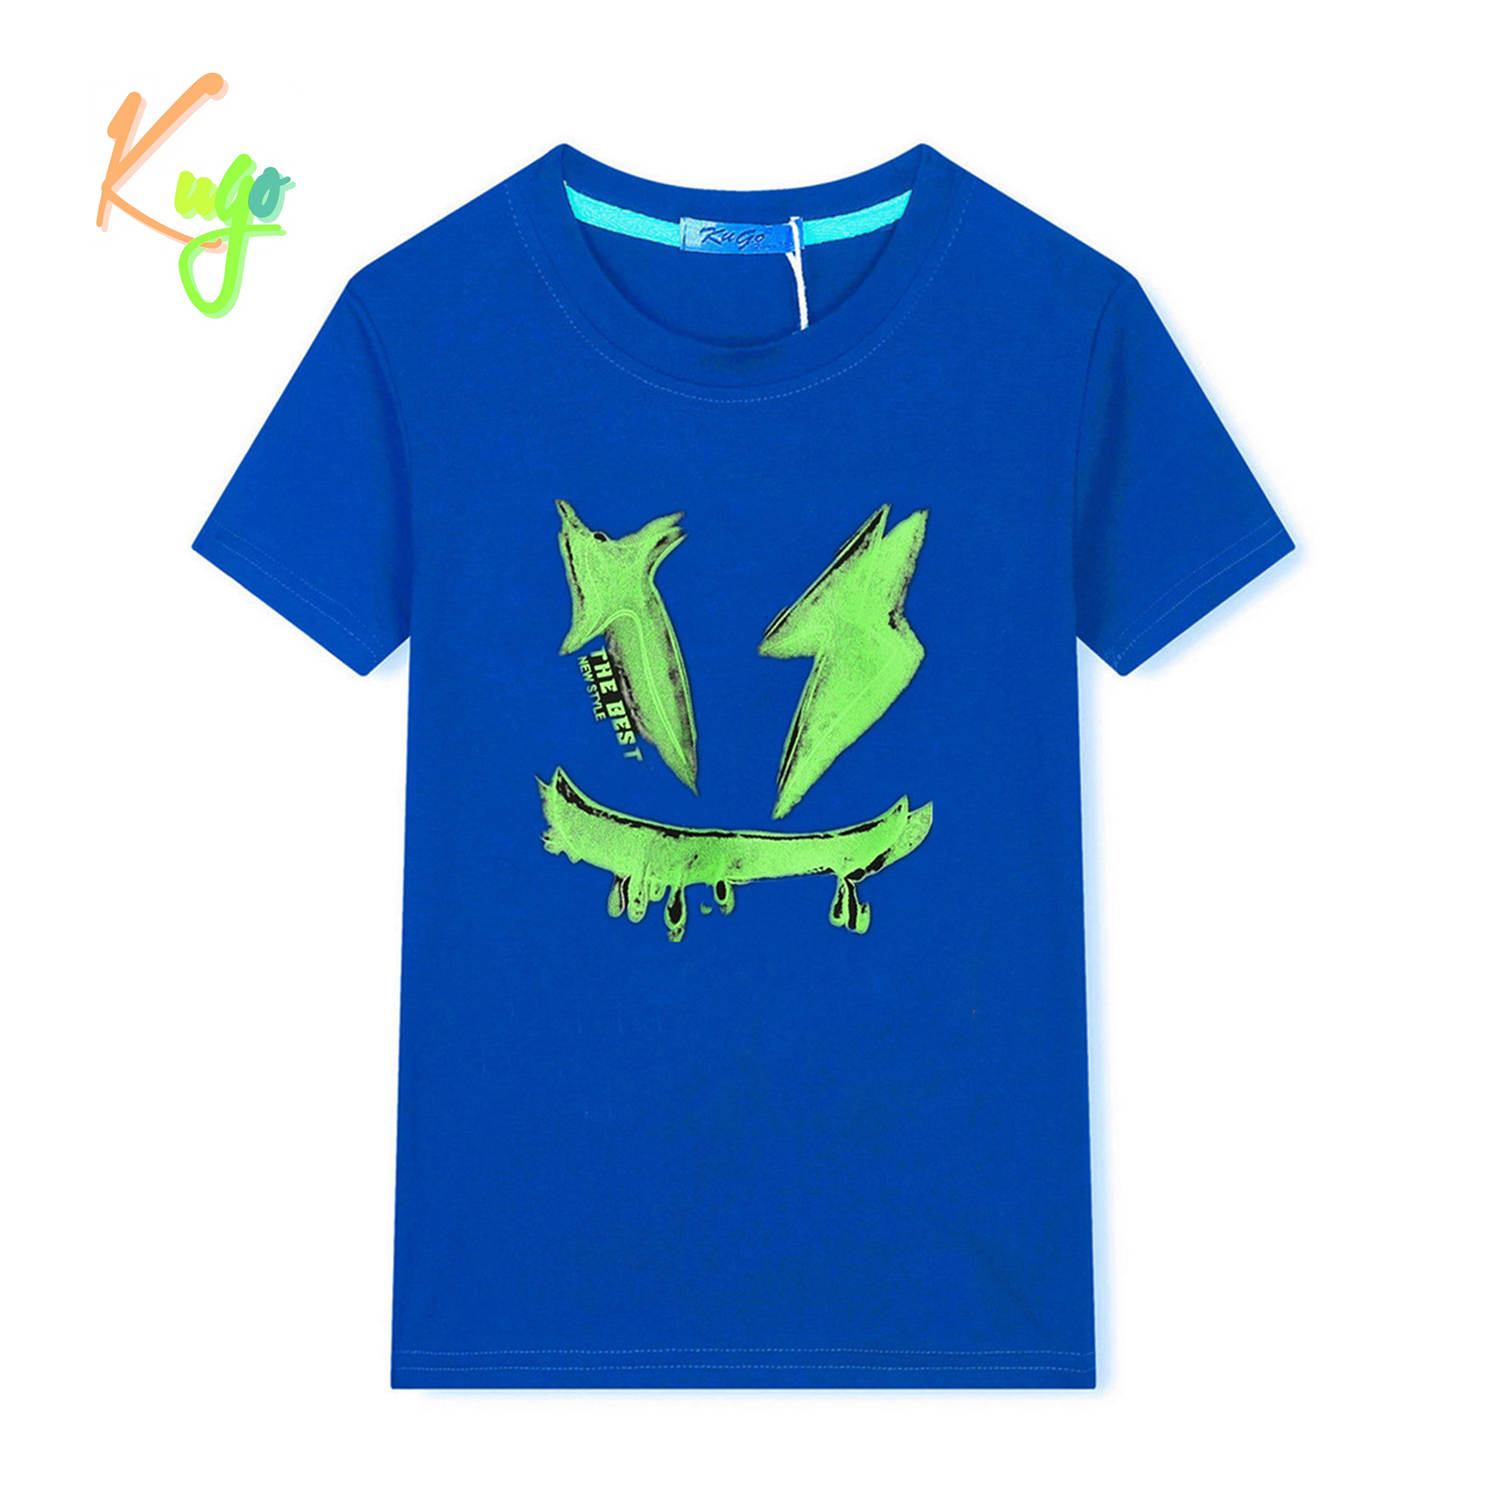 Chlapecké tričko - KUGO HC9292, modrá Barva: Modrá, Velikost: 134